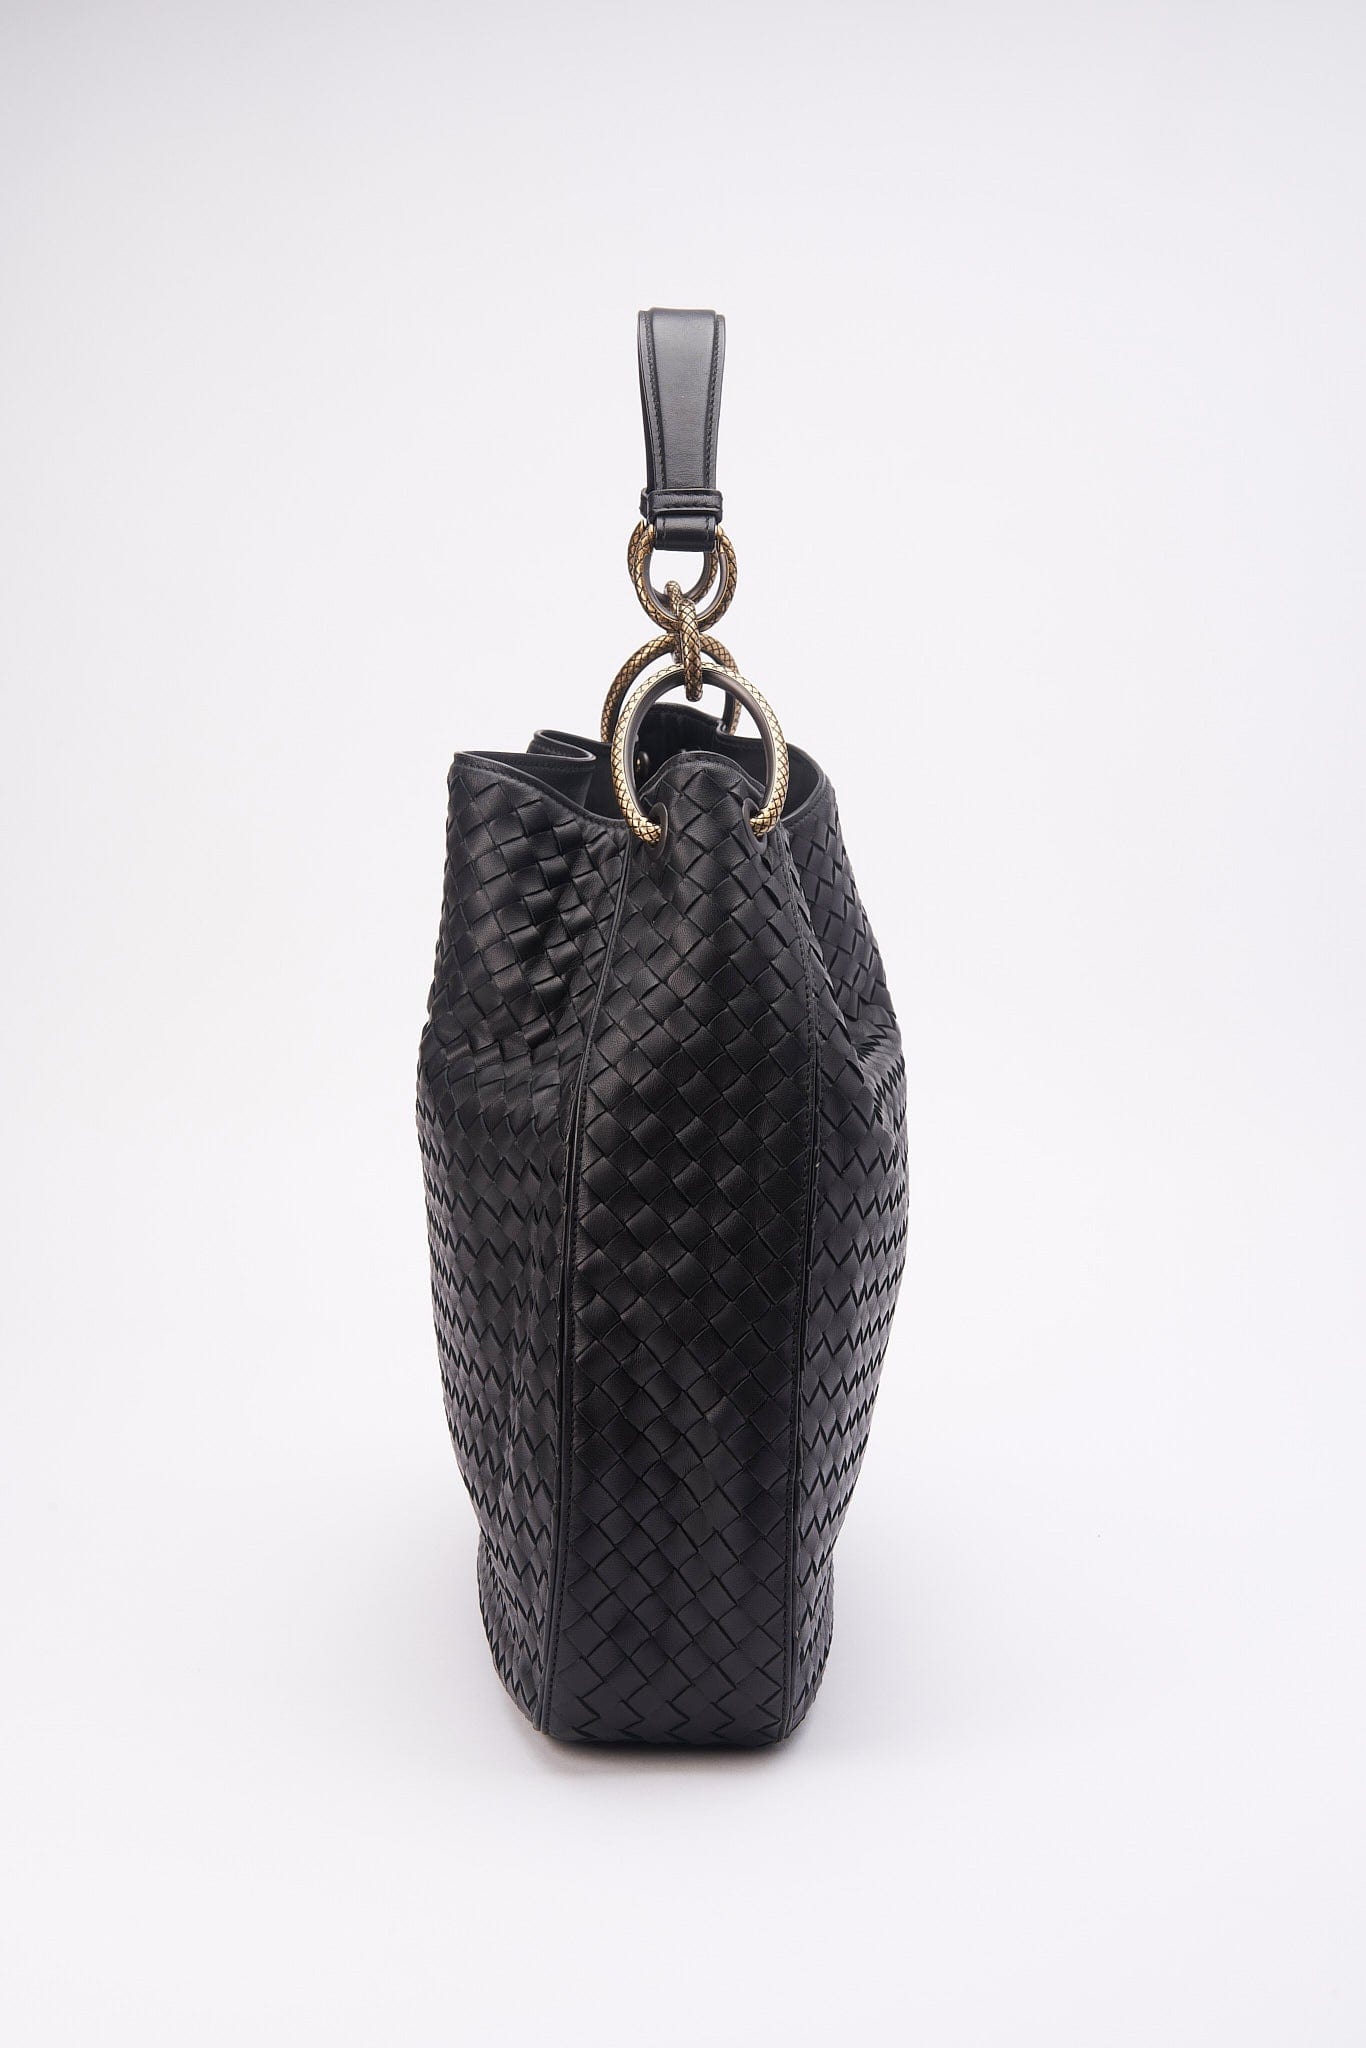 Vintage Bottega Veneta Black Intrecciato Leather Tote Shoulder Bag